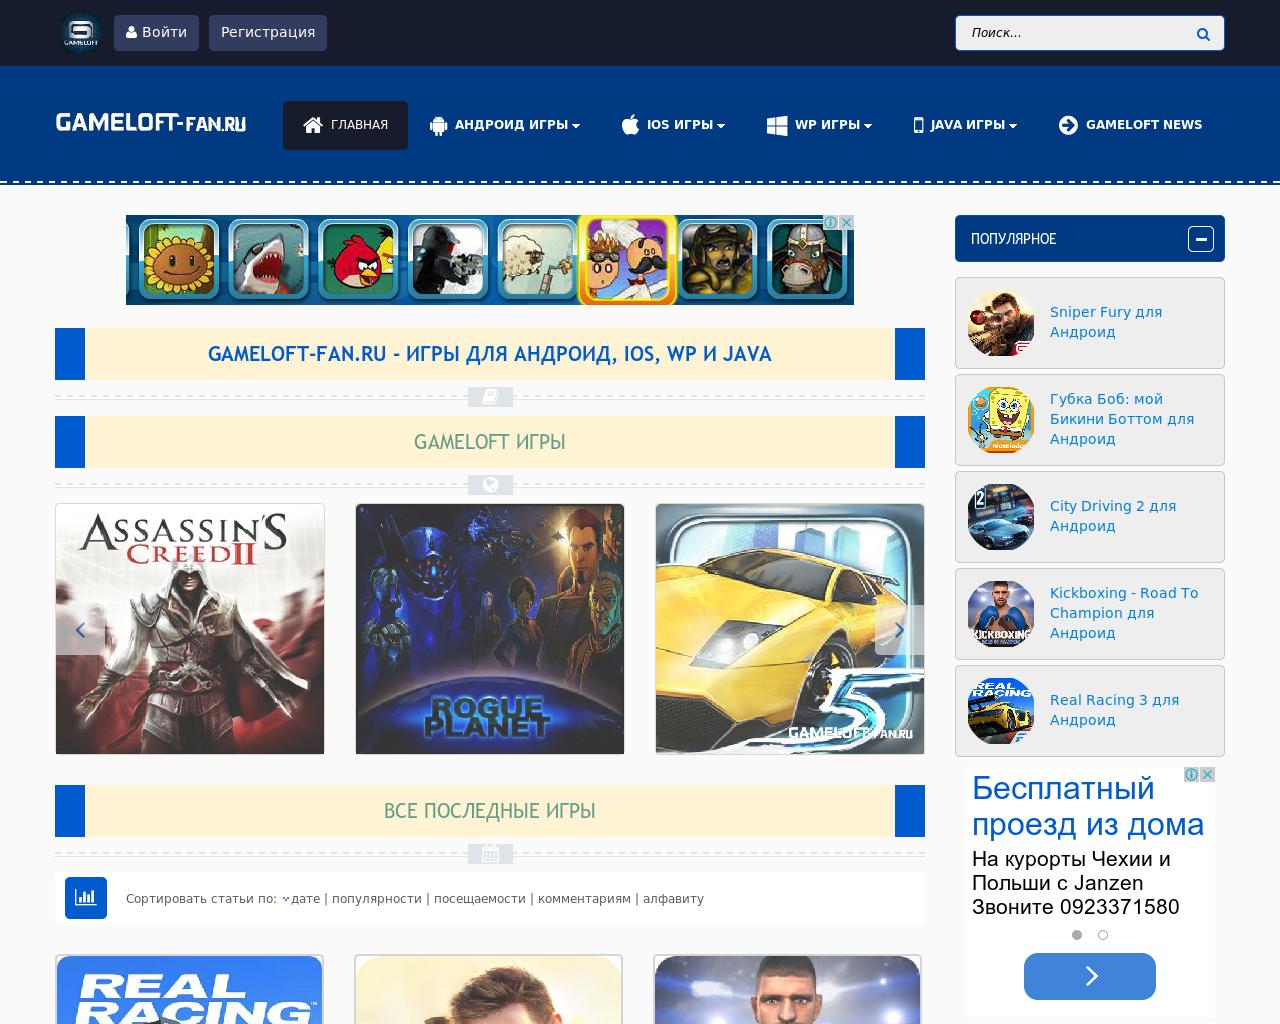 Изображение сайта gameloft-fan.ru в разрешении 1280x1024